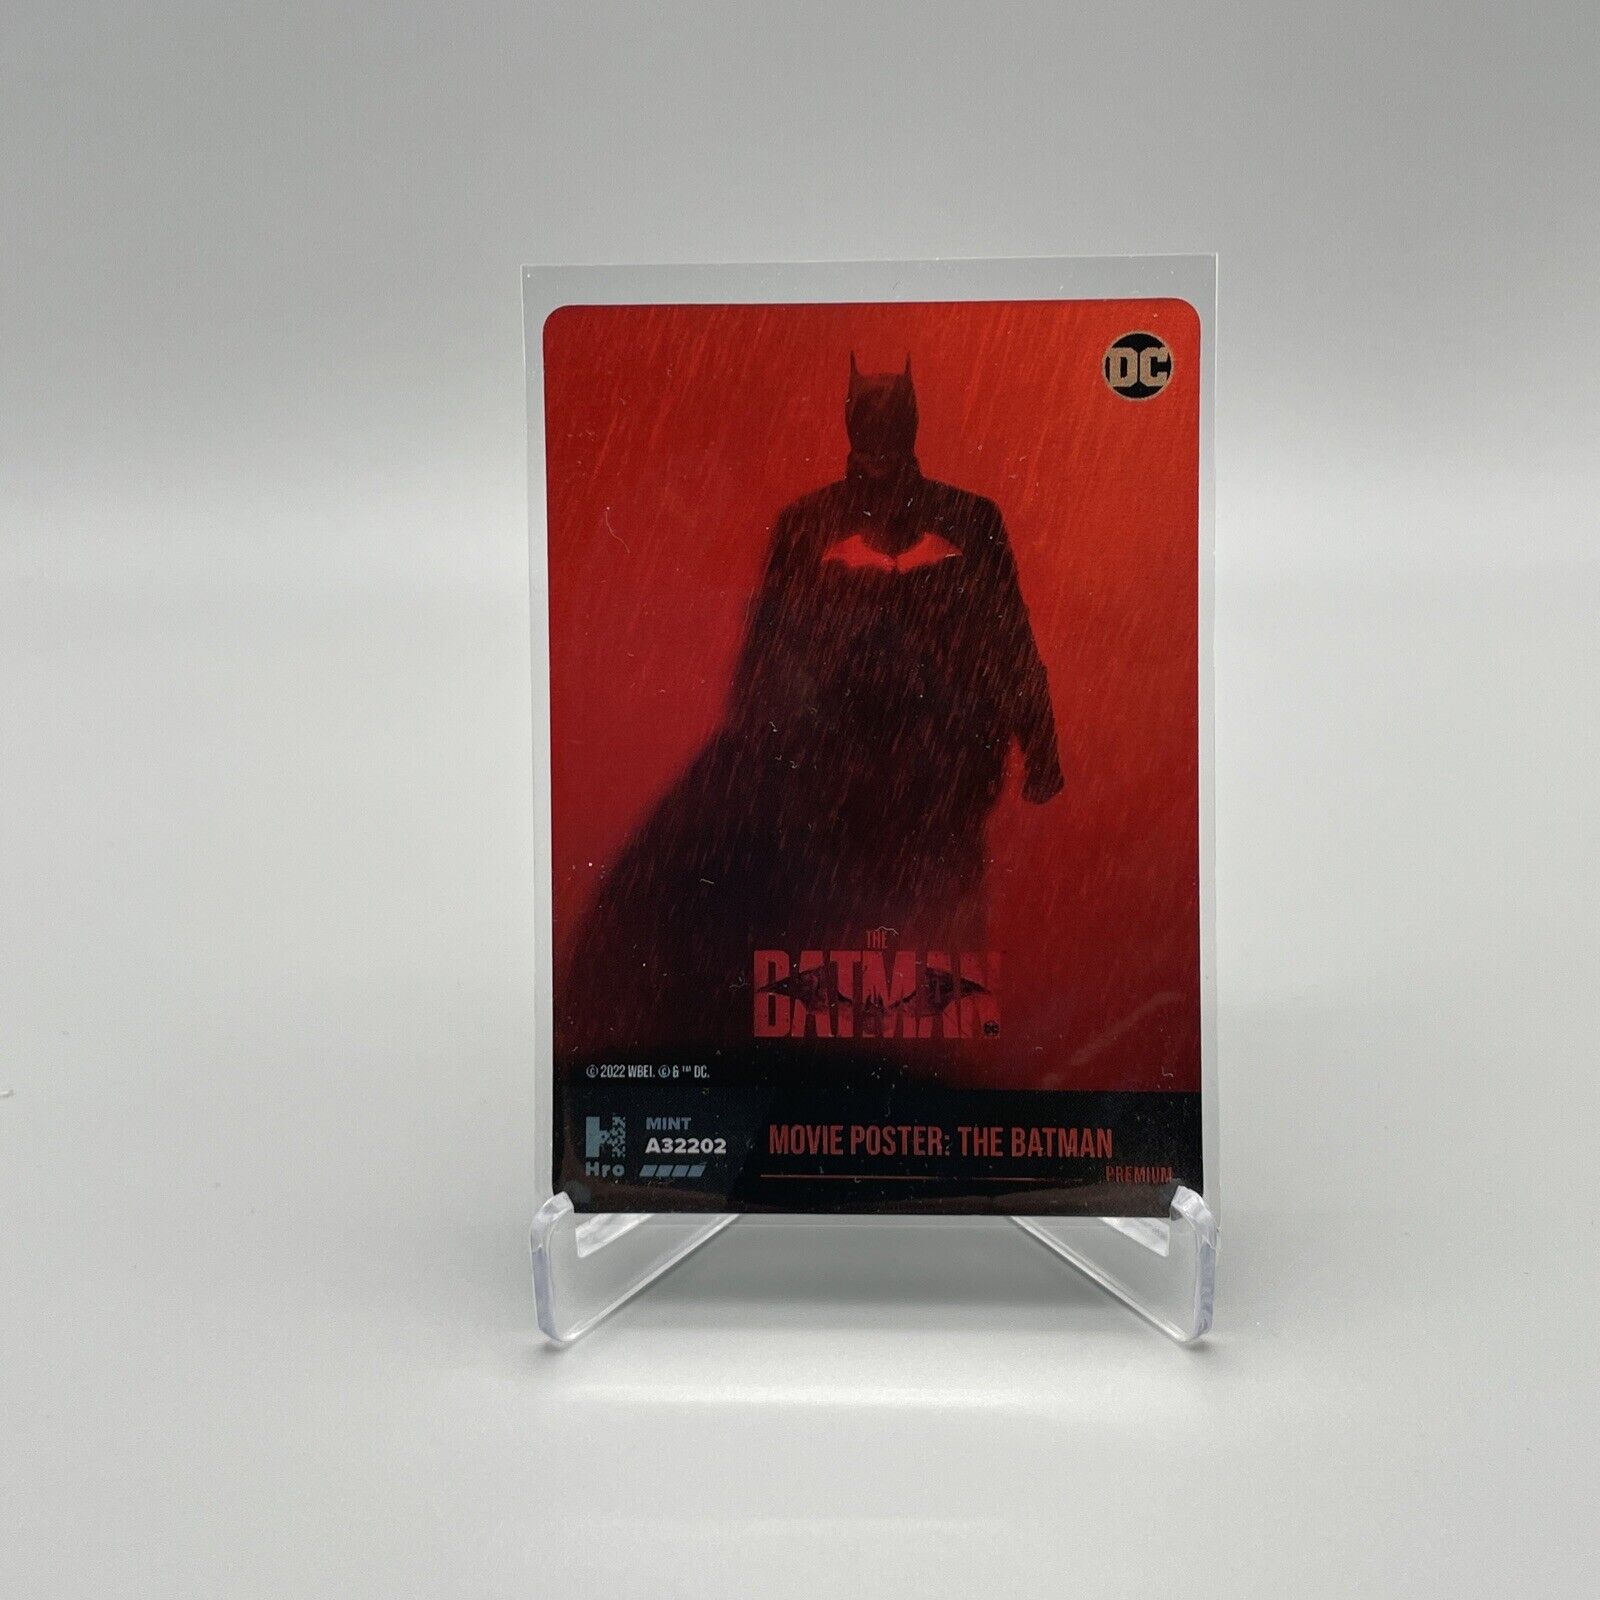 HRO DC Hybrid The Batman Movie Poster Physical Unscanned QR Mint A32202